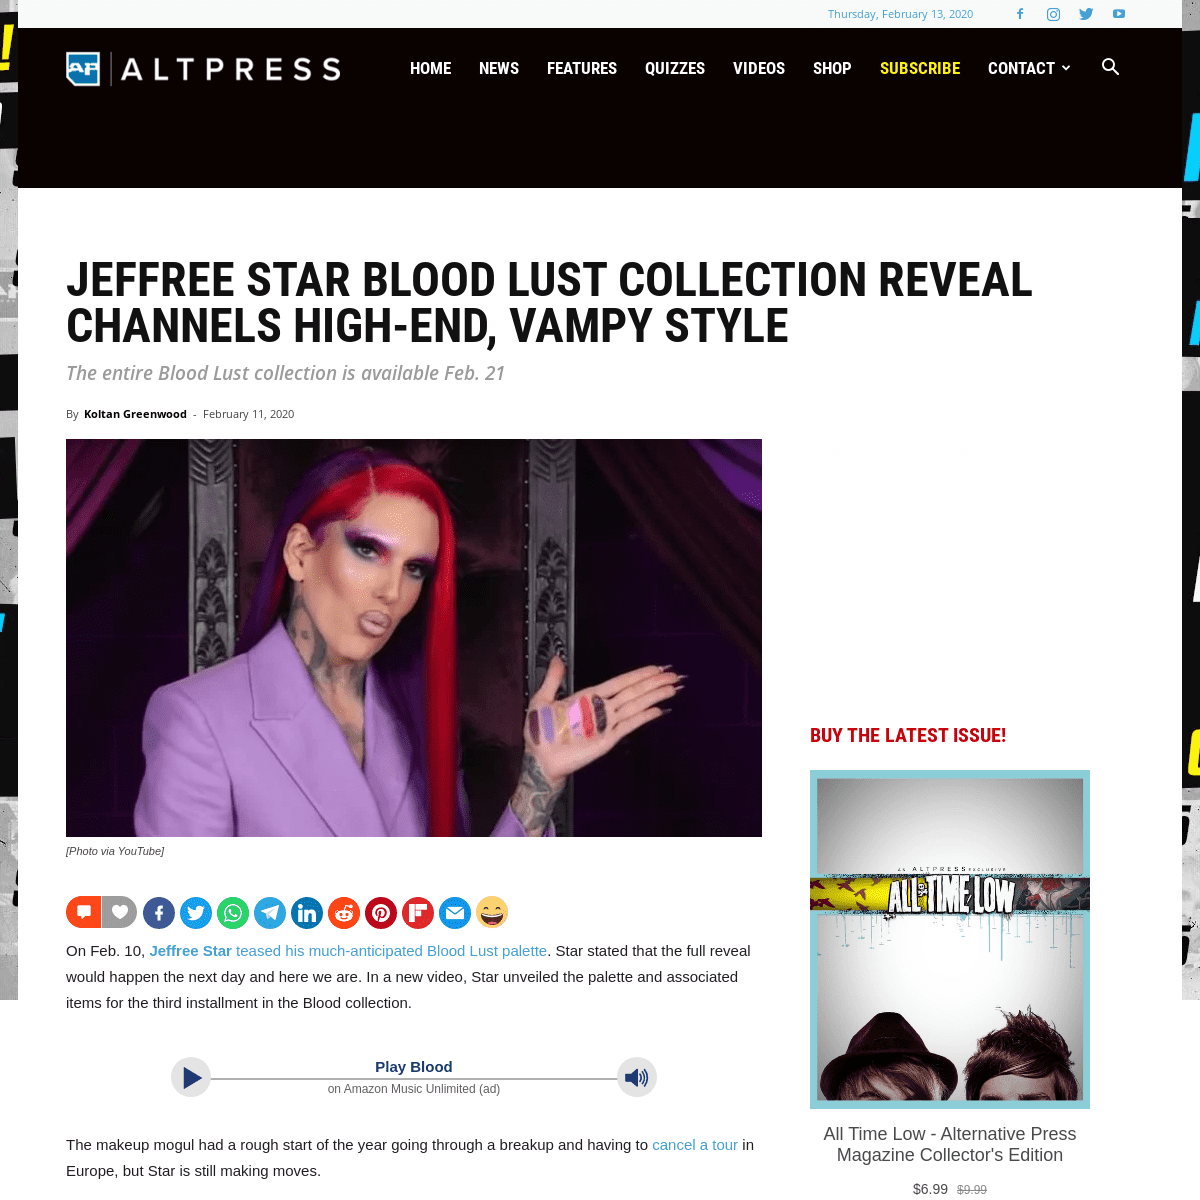 A complete backup of www.altpress.com/news/jeffree-star-blood-lust-collection/